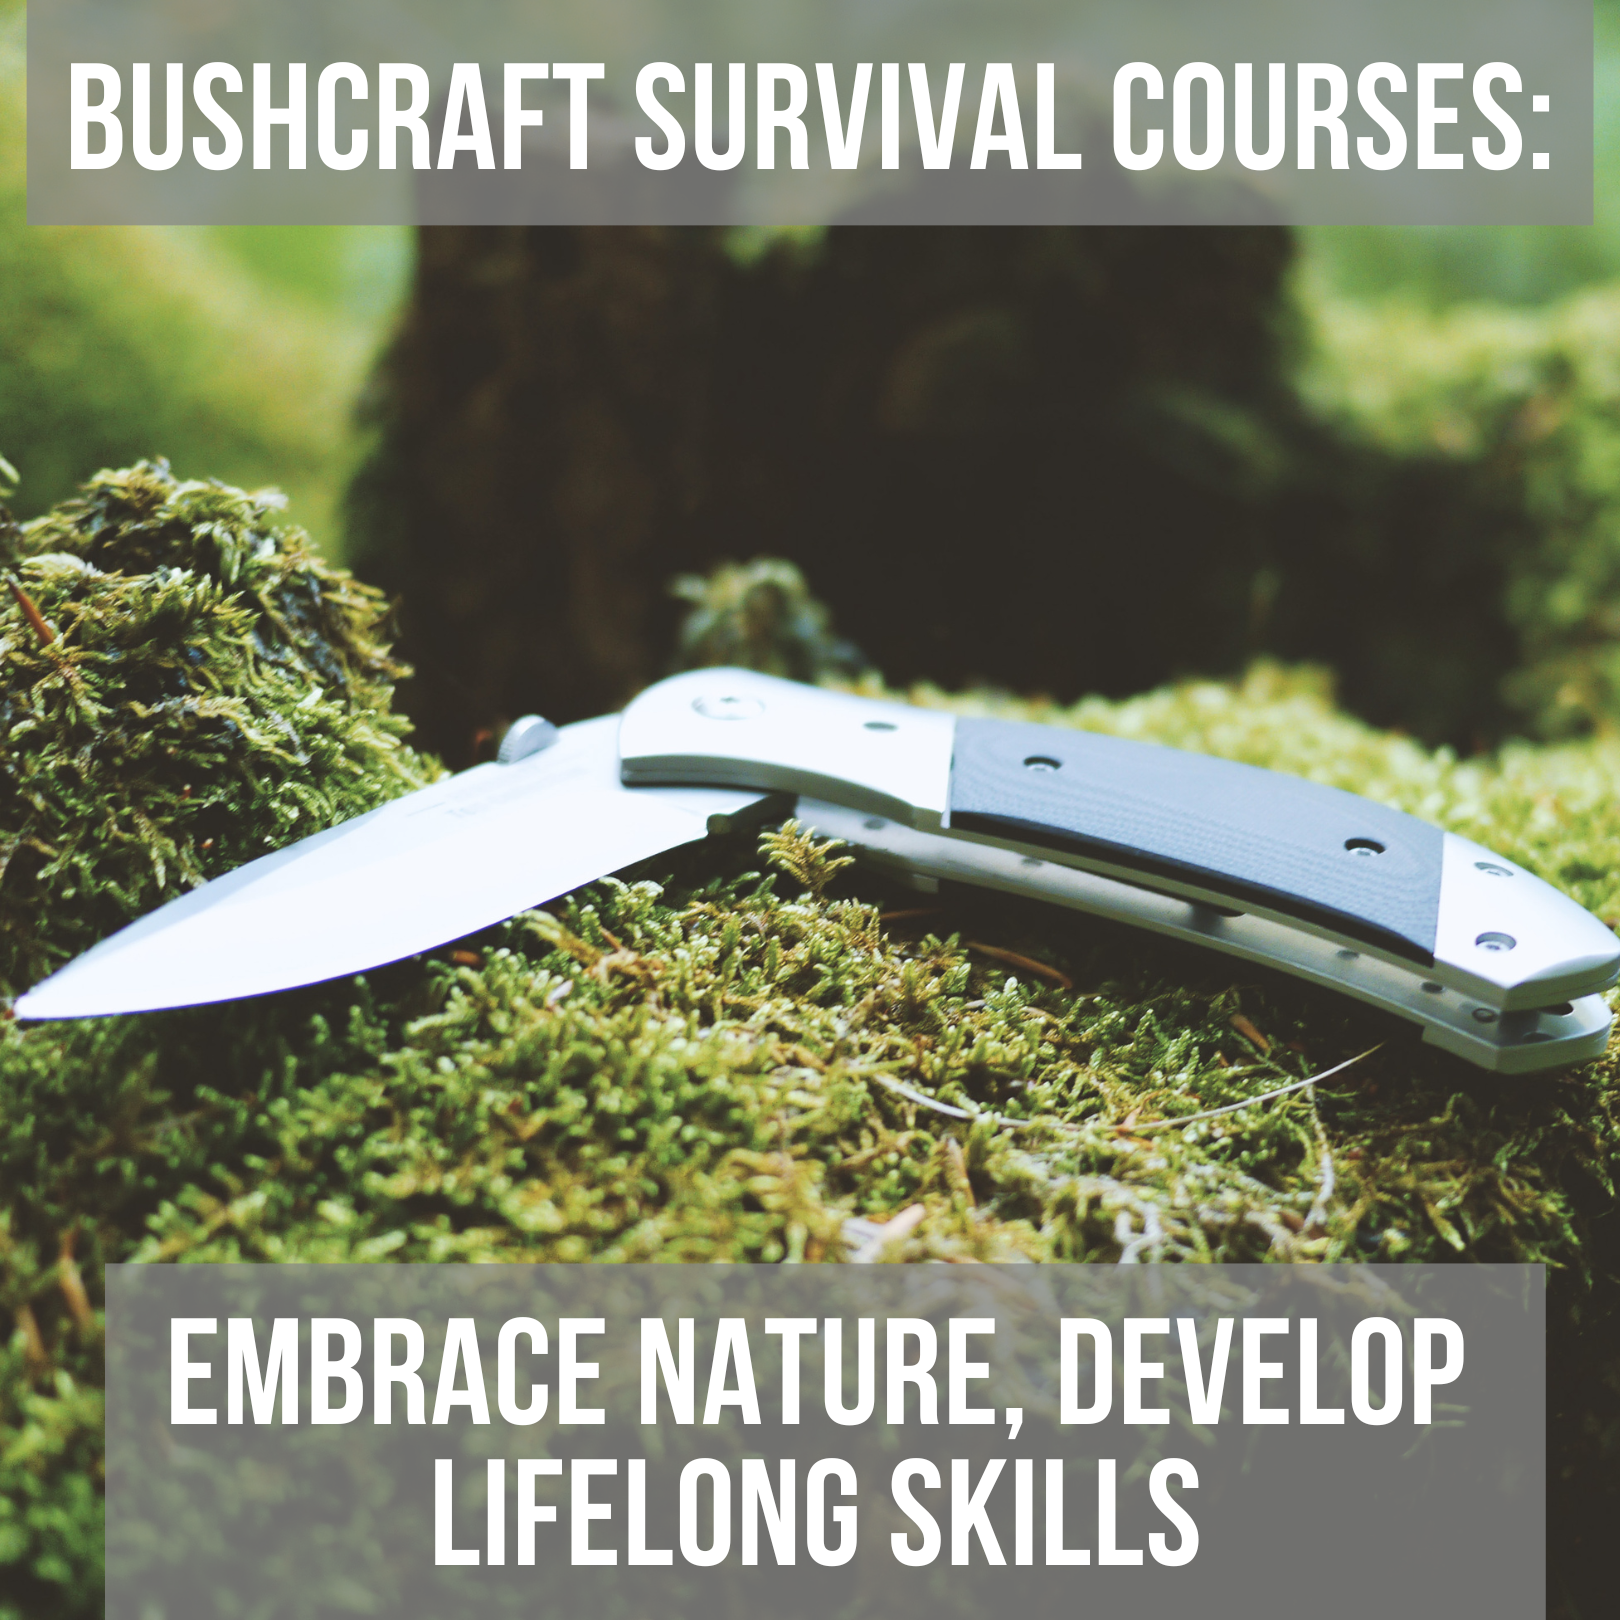 Selecting Bushcraft Tools: Part 2, Bushcraft